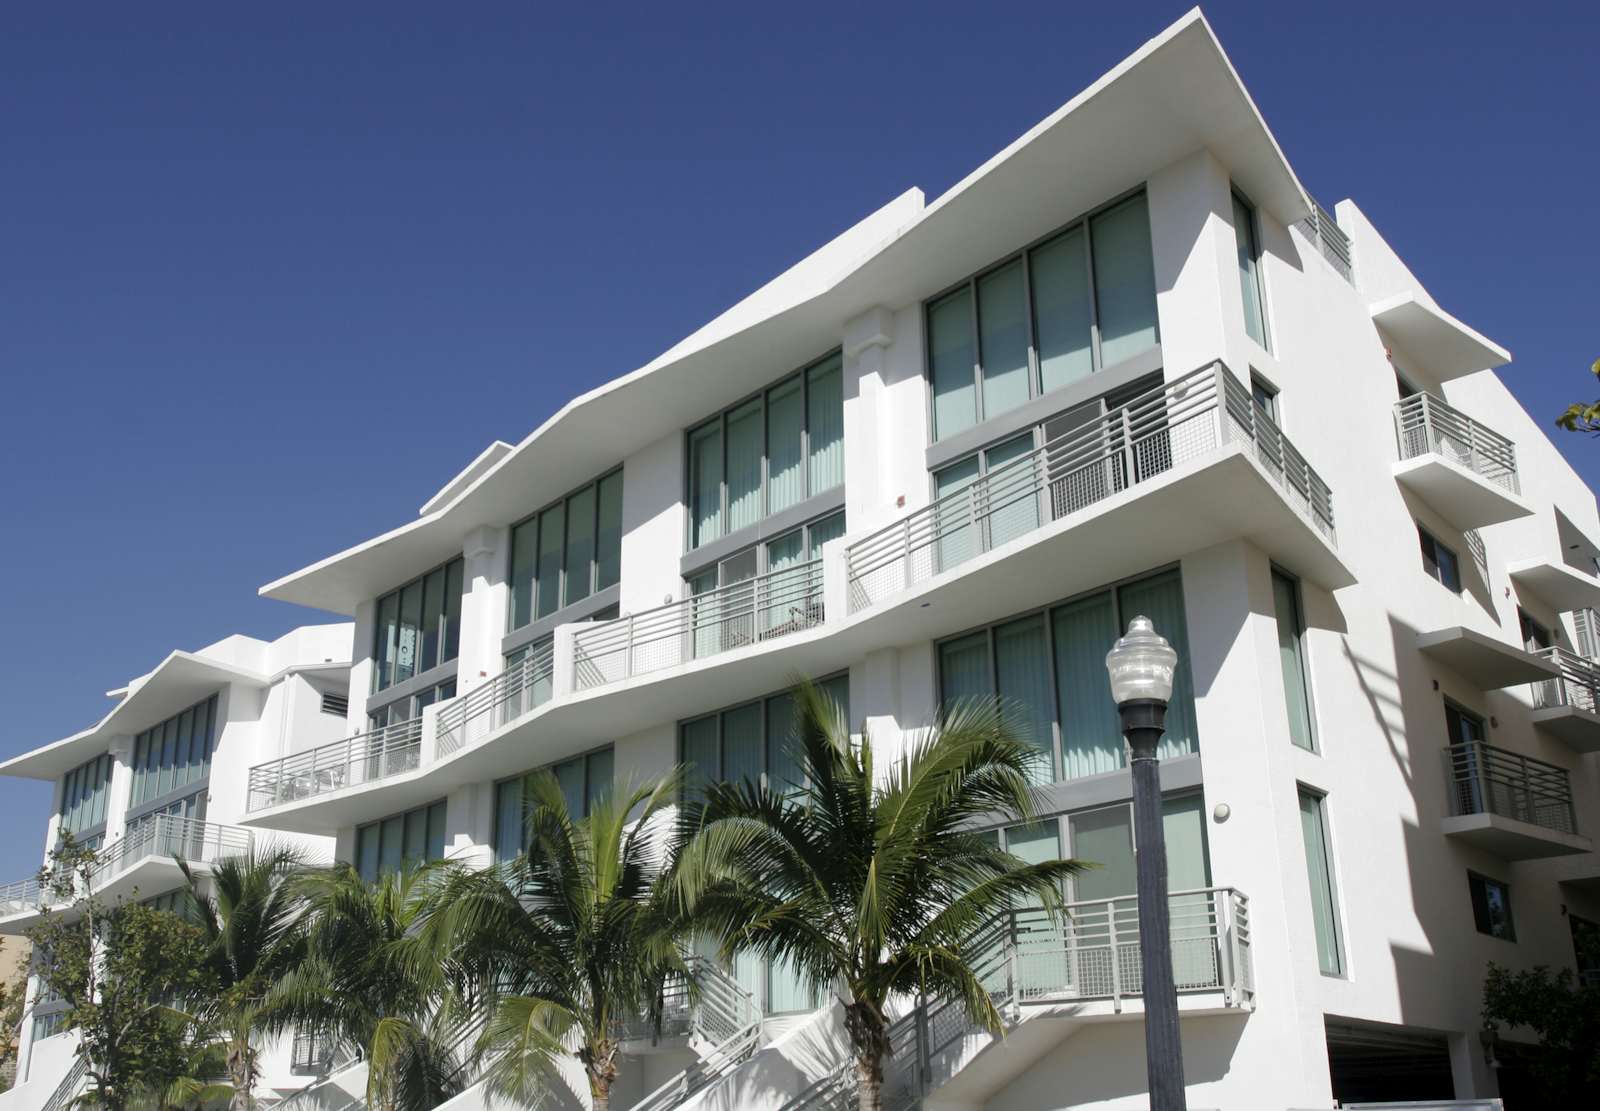 New modern condos in South Beach, Florida